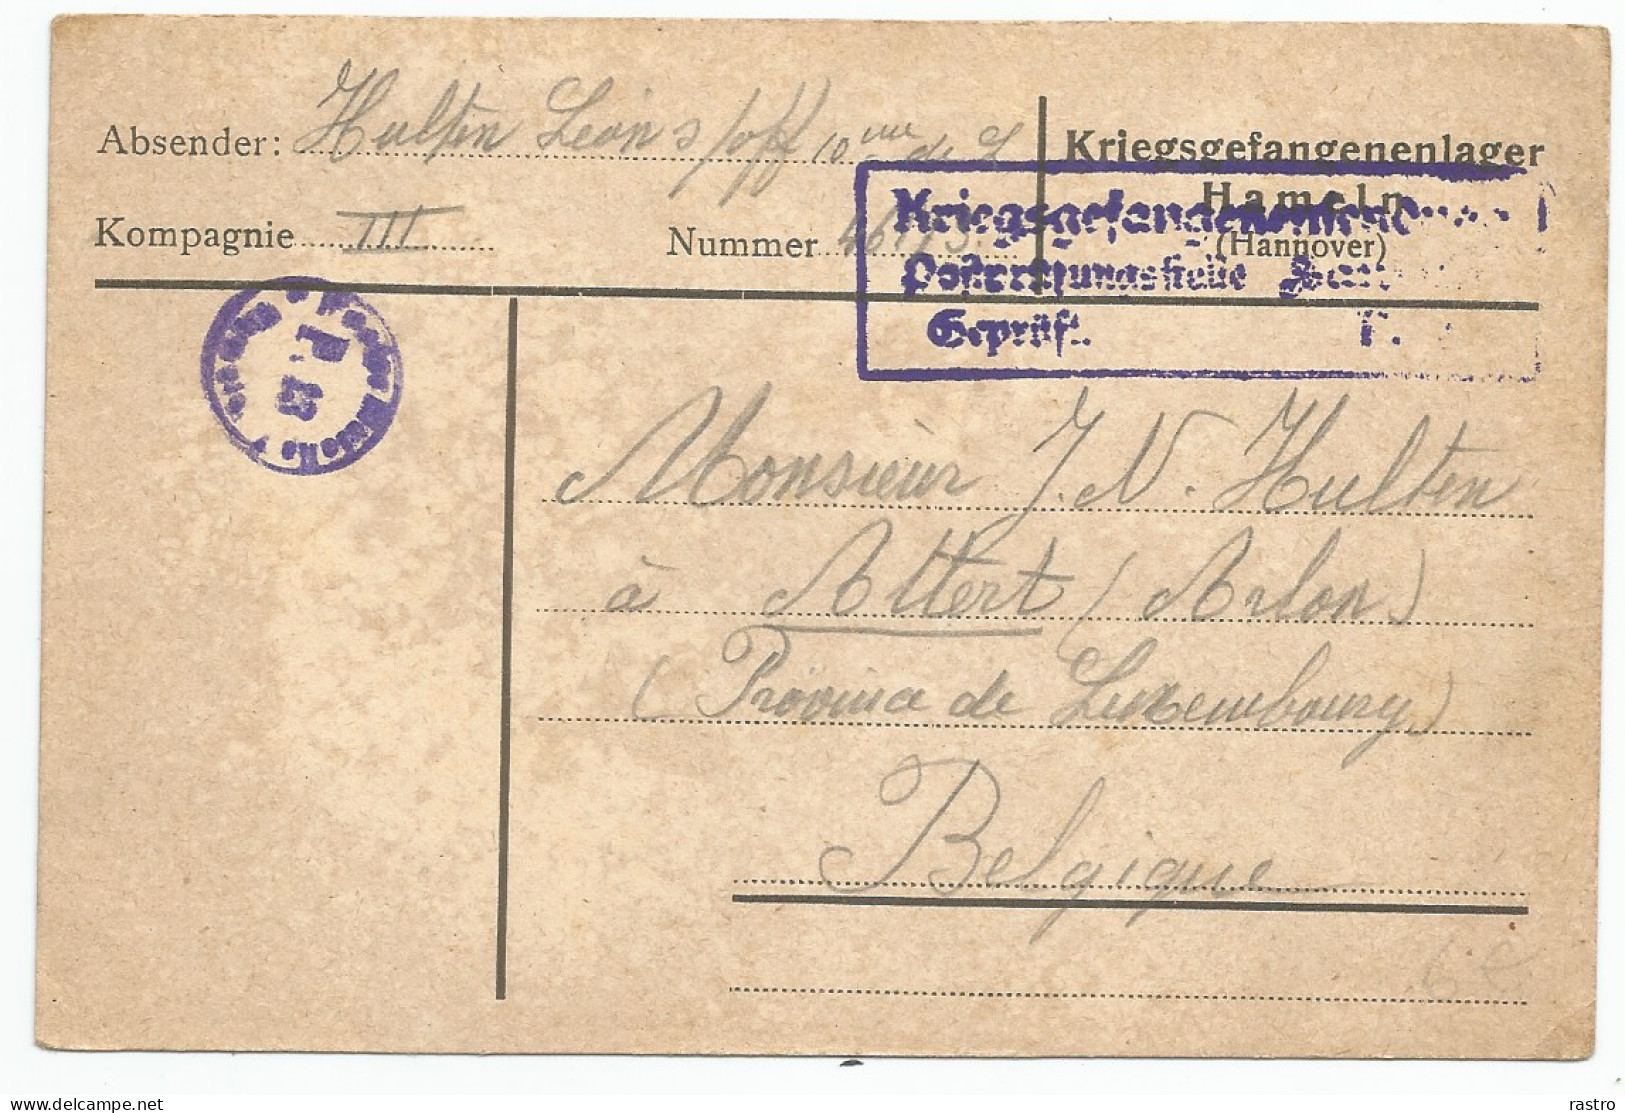 Courrier En Franchise De Prisonnier Belge Du Camp De Hameln (Hanovre) Vers Attert (1917)  Visas De Censure Du Camp - Krijgsgevangenen